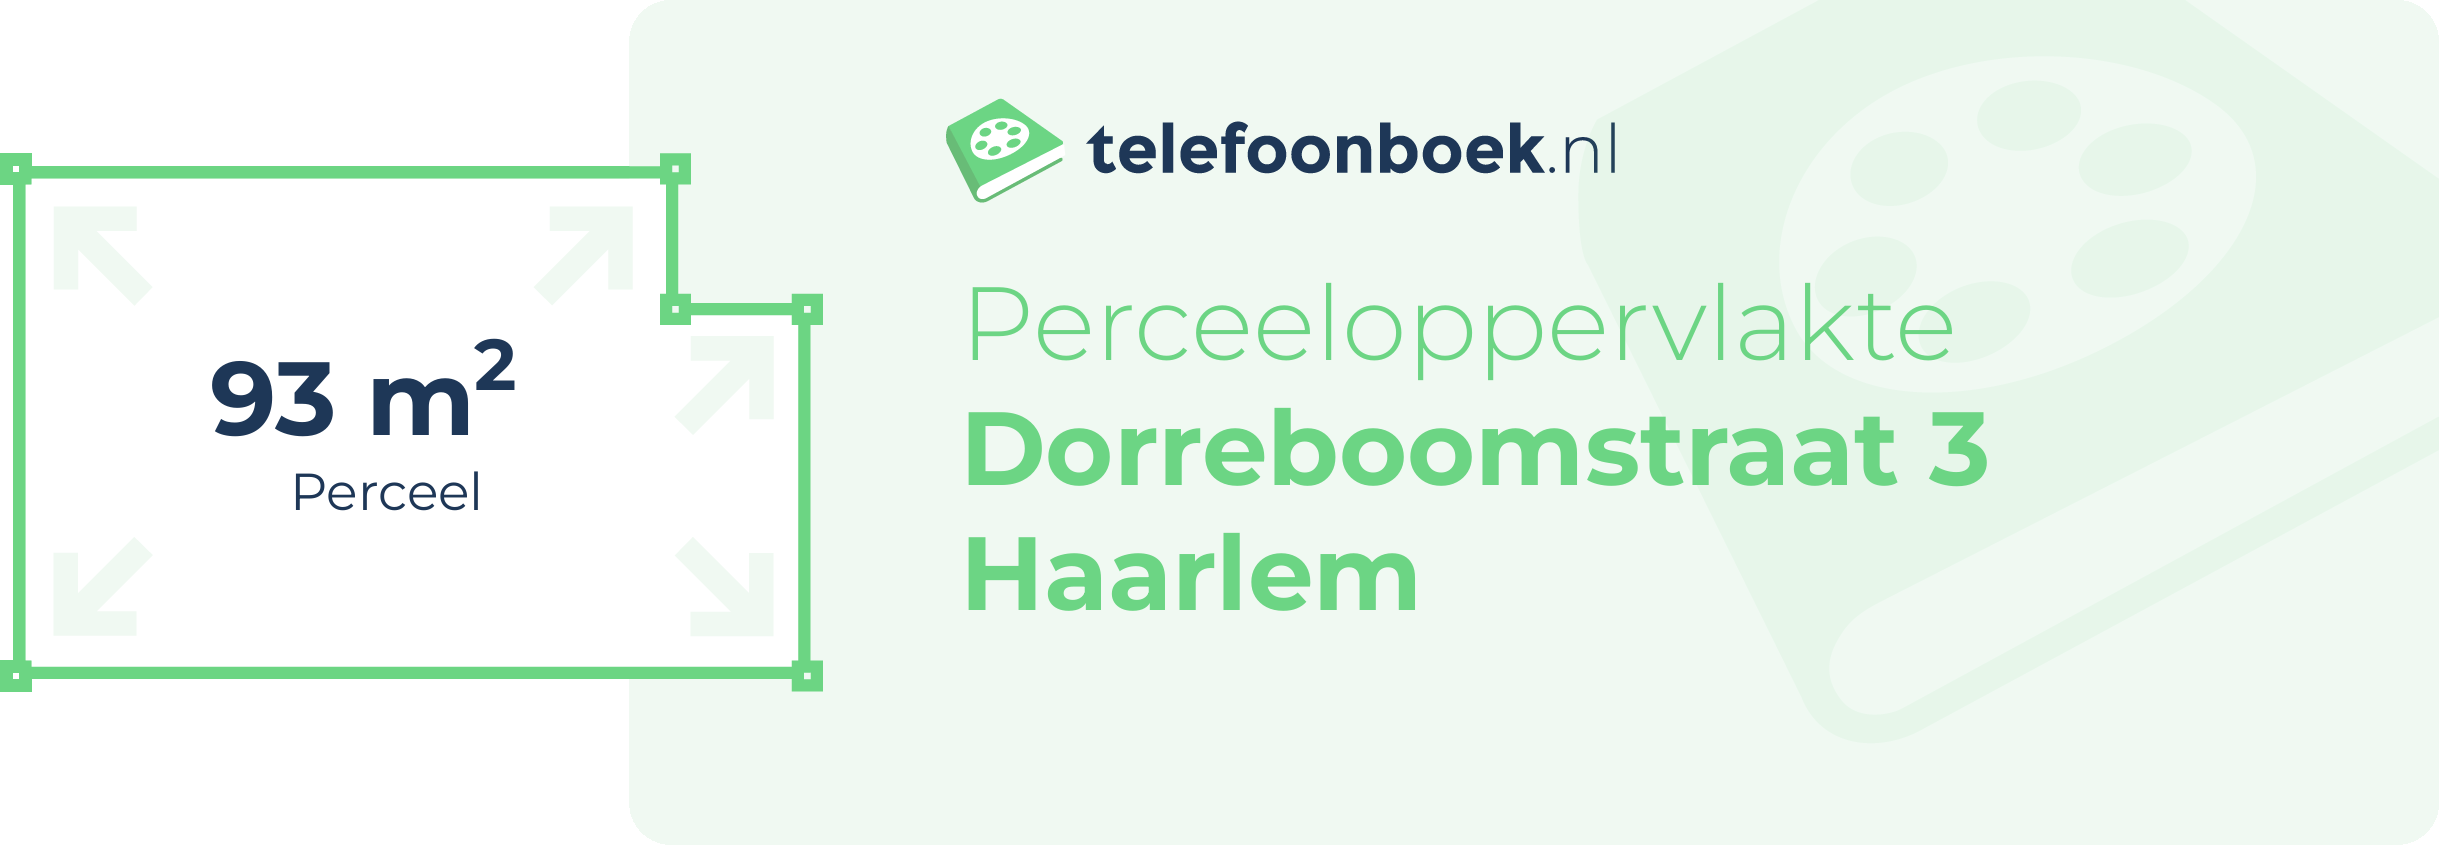 Perceeloppervlakte Dorreboomstraat 3 Haarlem